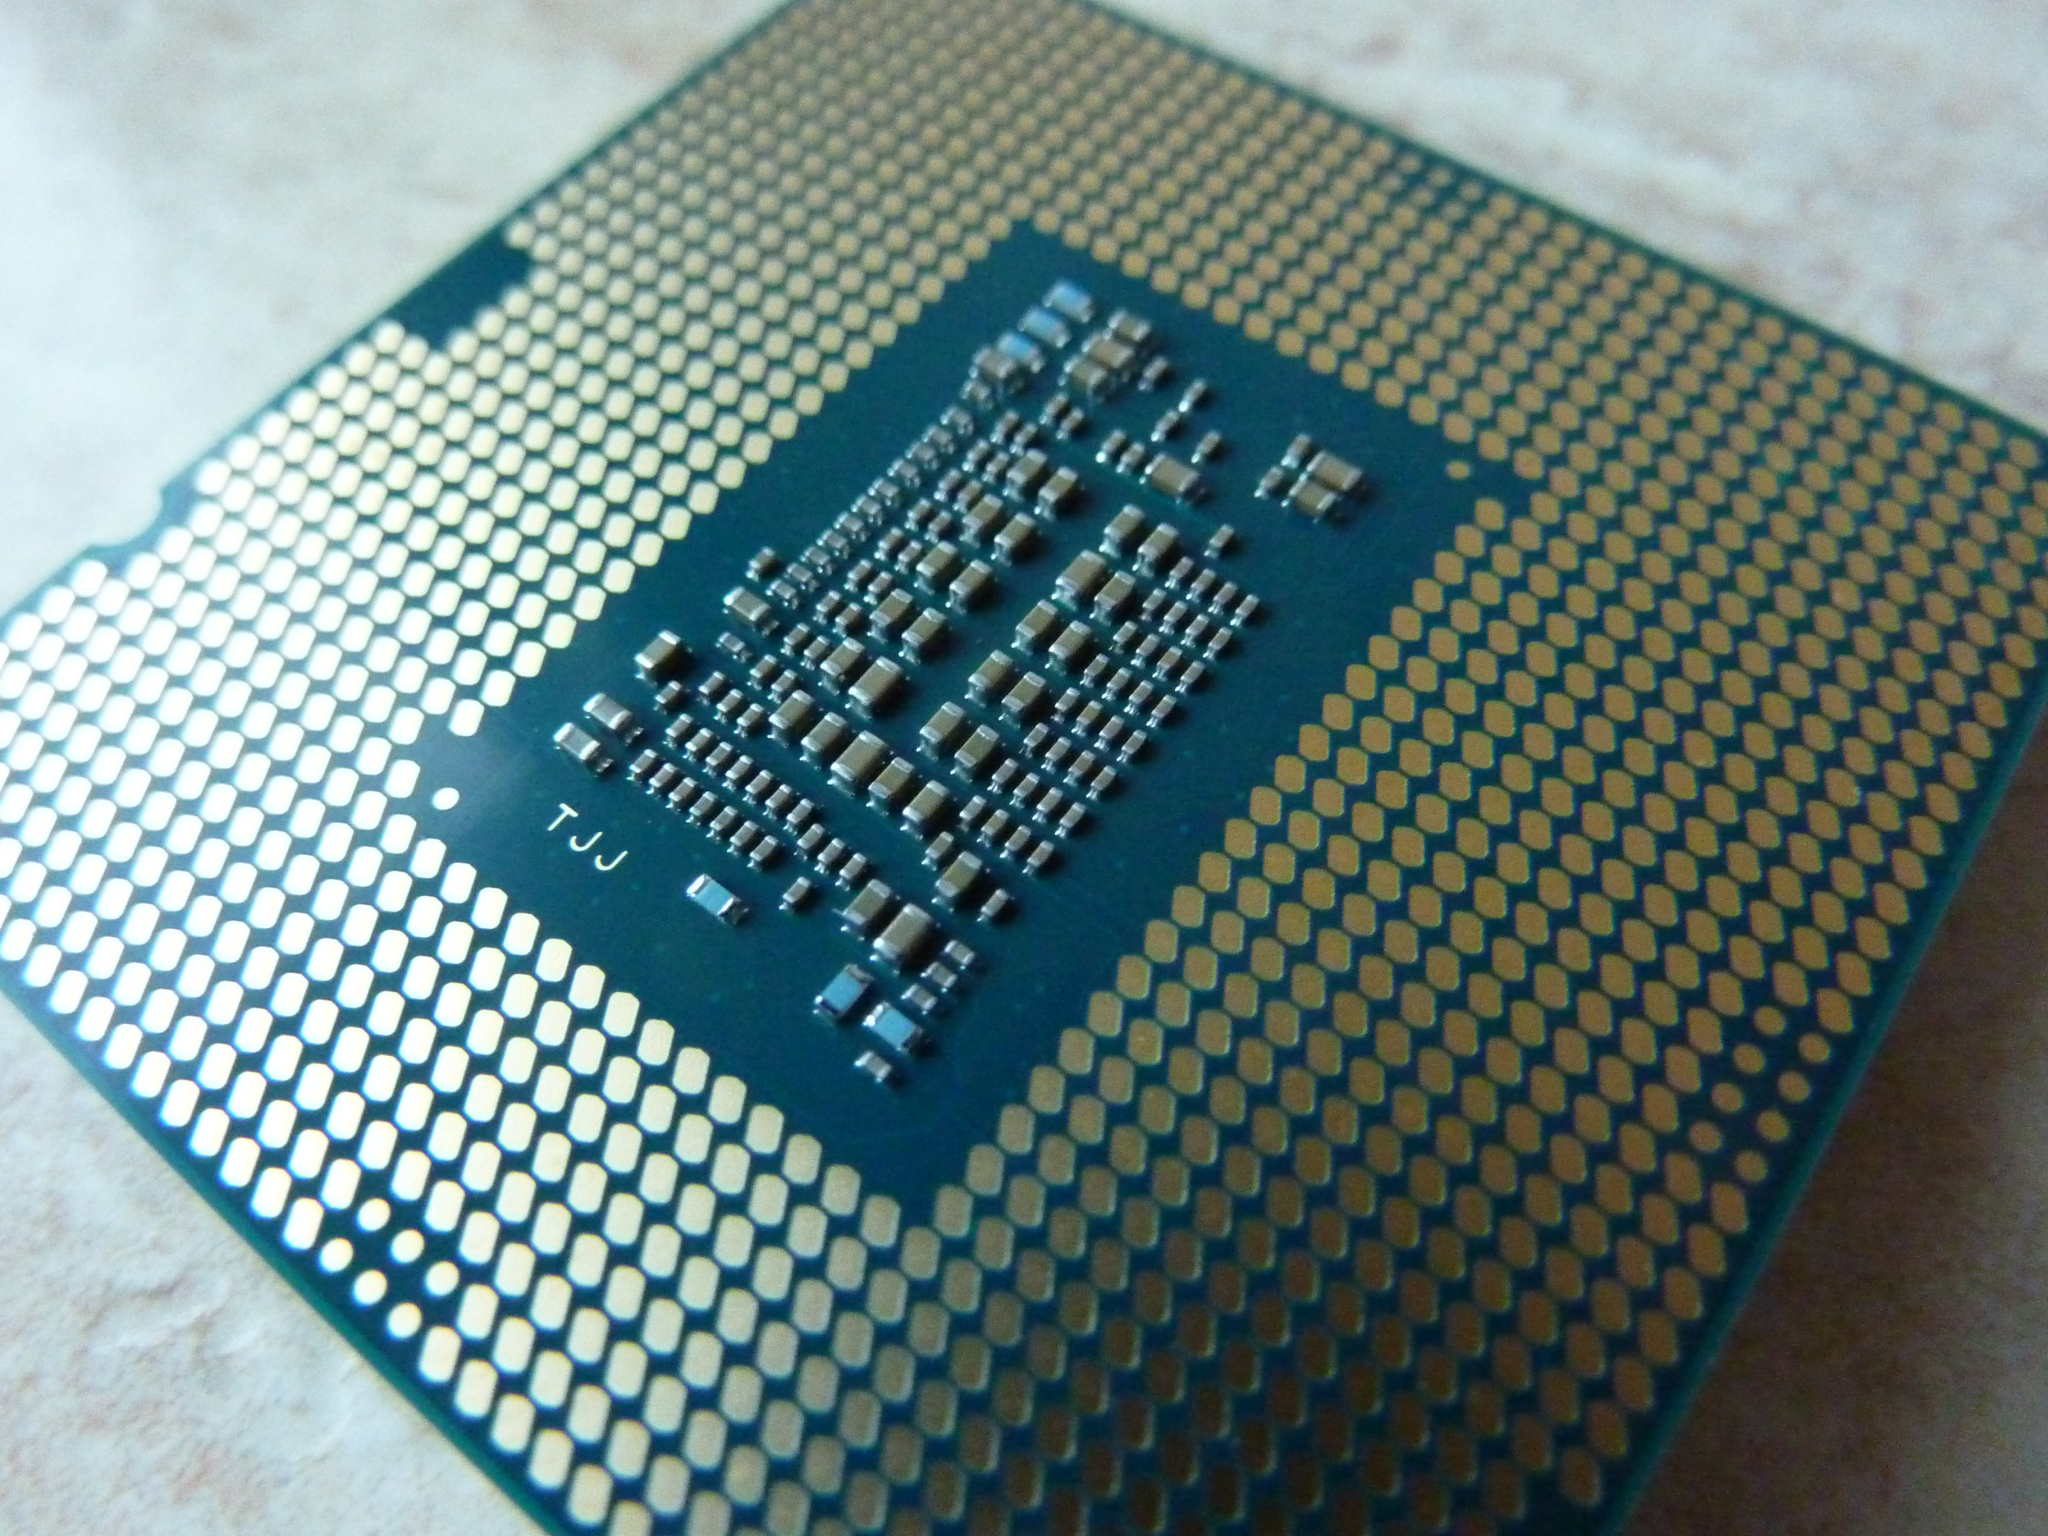 Intel core i5 10400f 2.9 ггц. Процессор Intel Core i5-10400f. Core i5-10400f lga1200. Процессор Intel Core i5-10400f OEM. Intel Core i5 10400, LGA 1200, OEM.